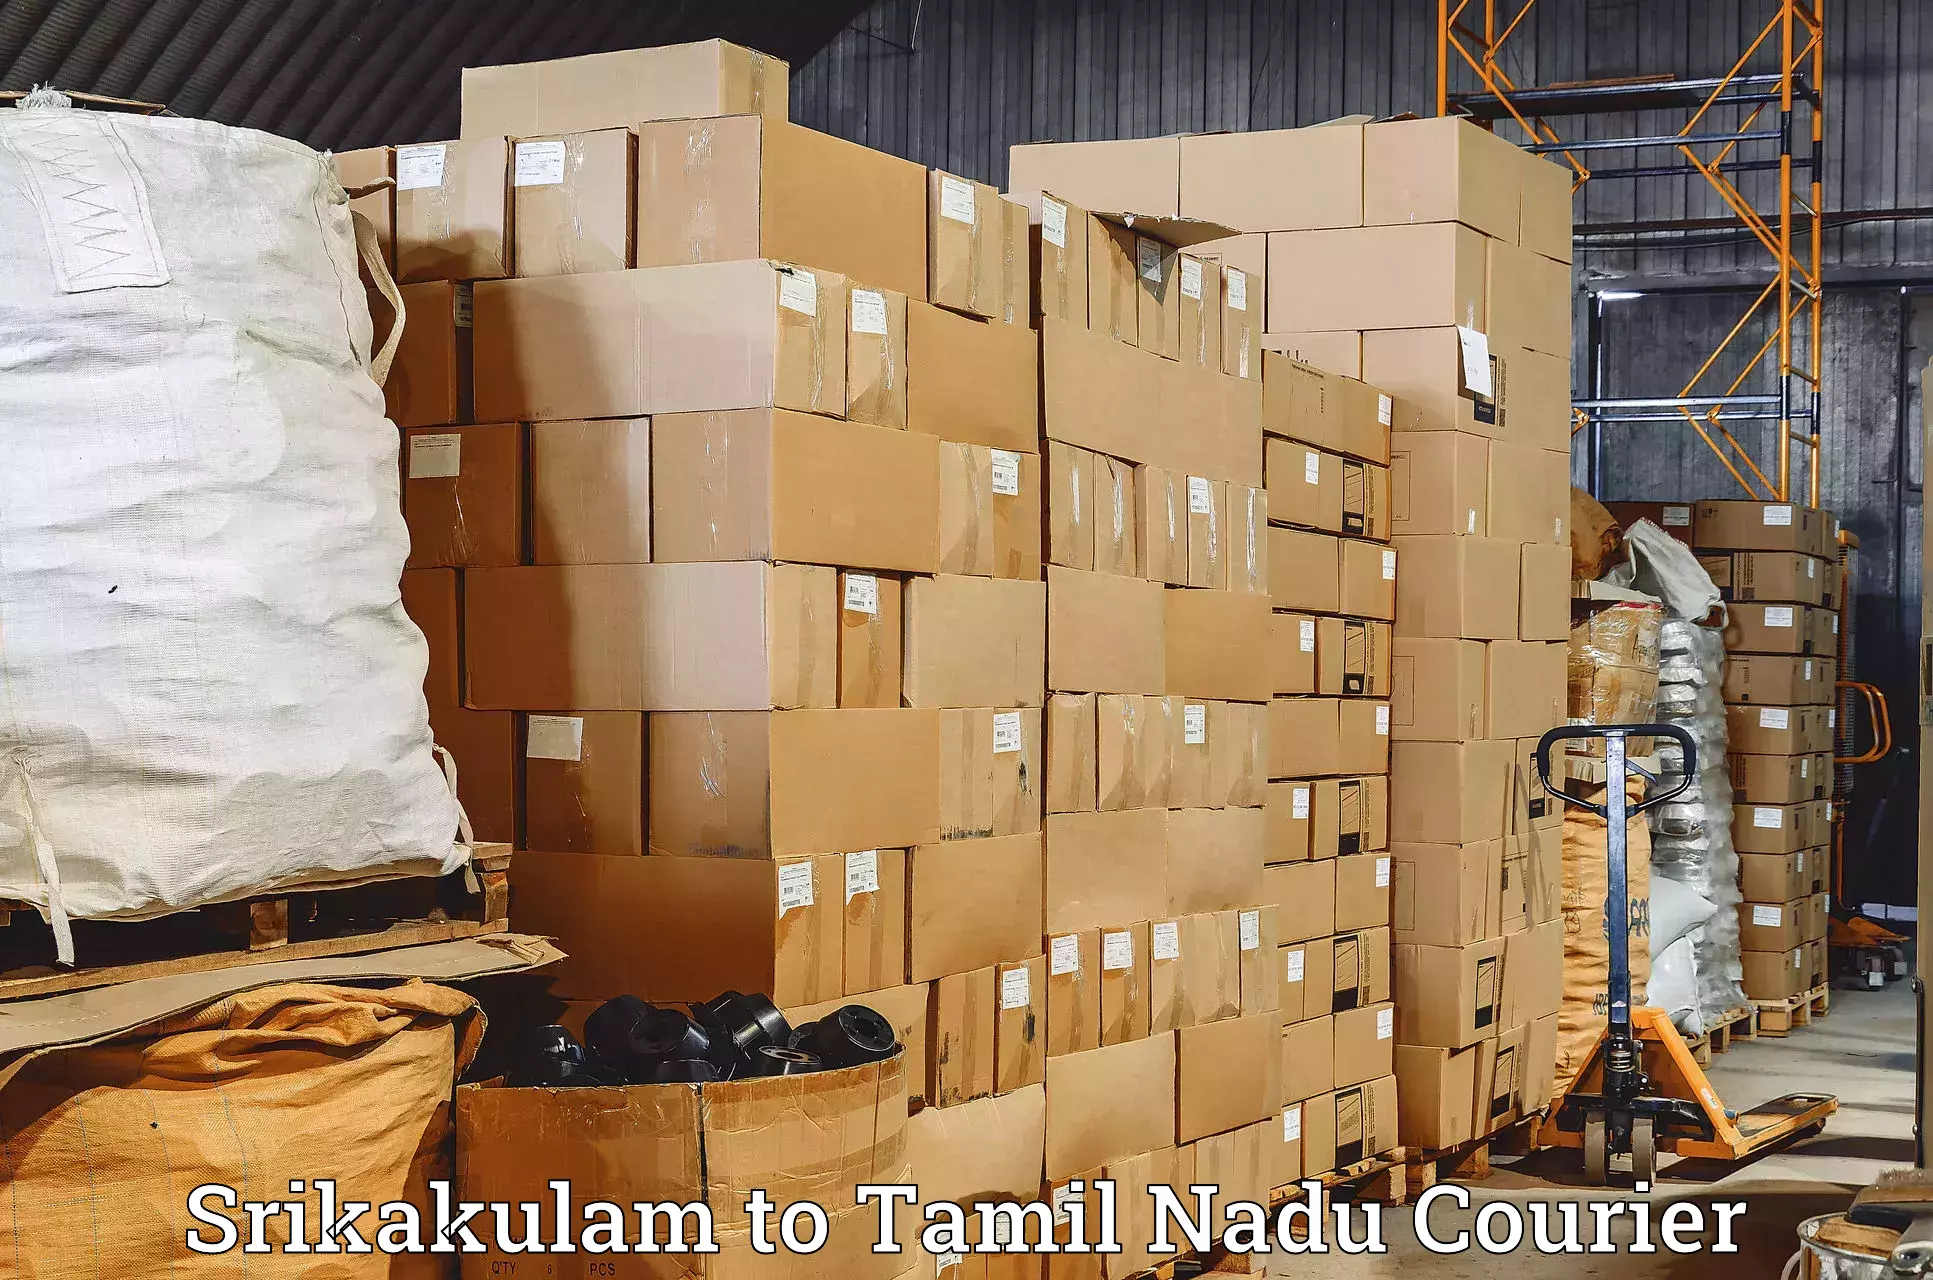 Courier service innovation Srikakulam to Cuddalore